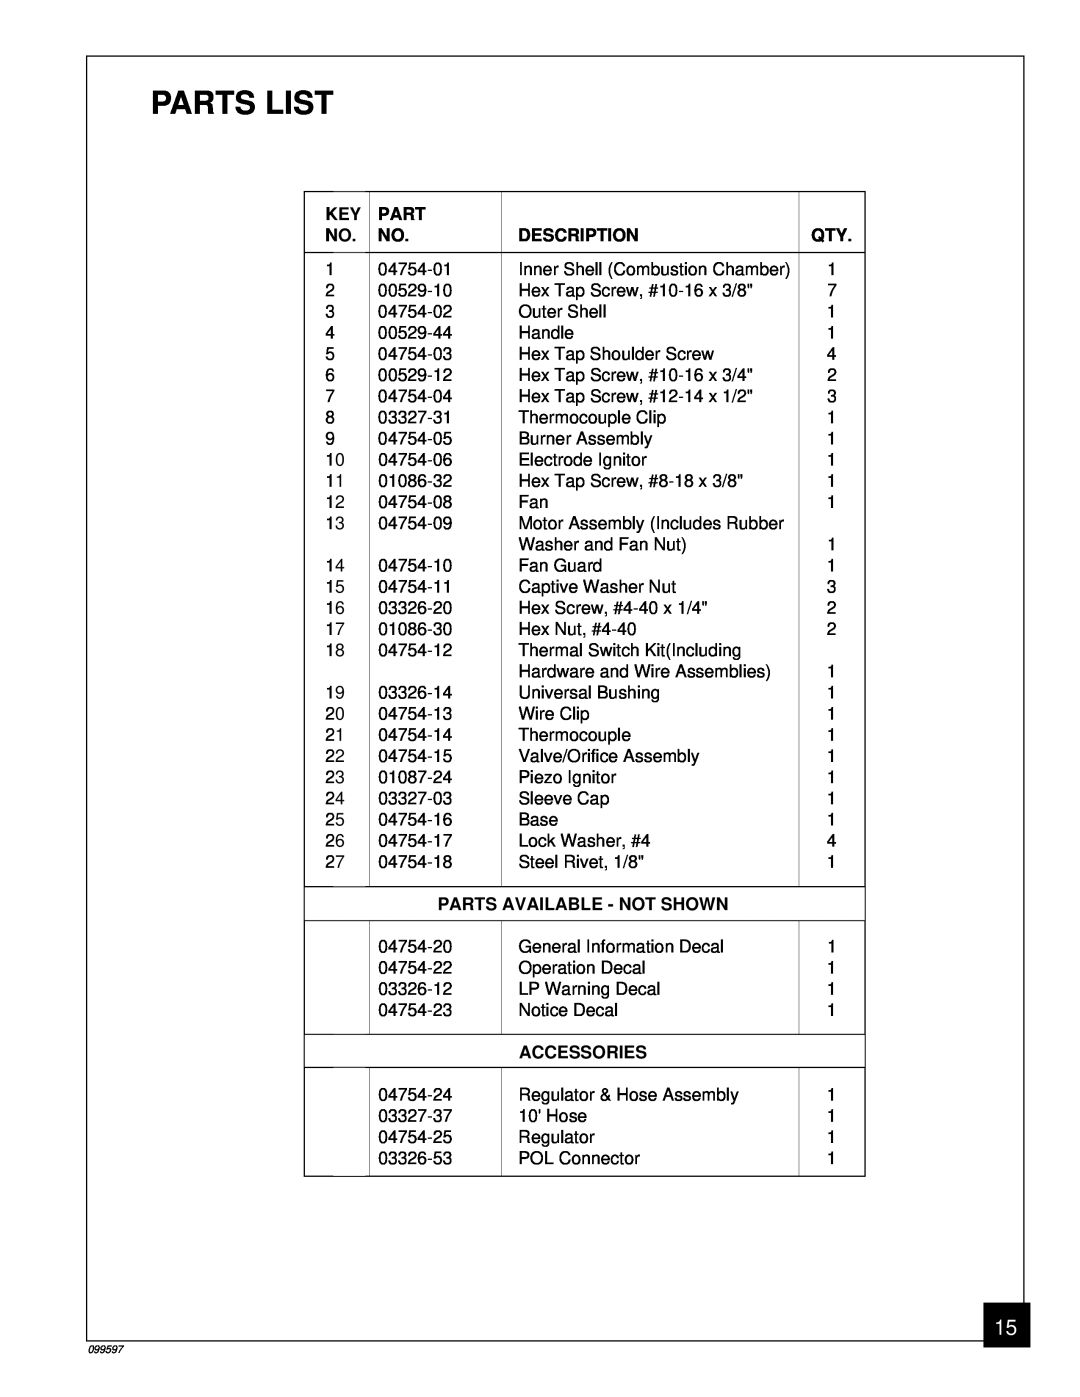 Homelite HP35 owner manual Parts List, Description, Parts Available - Not Shown, Accessories 